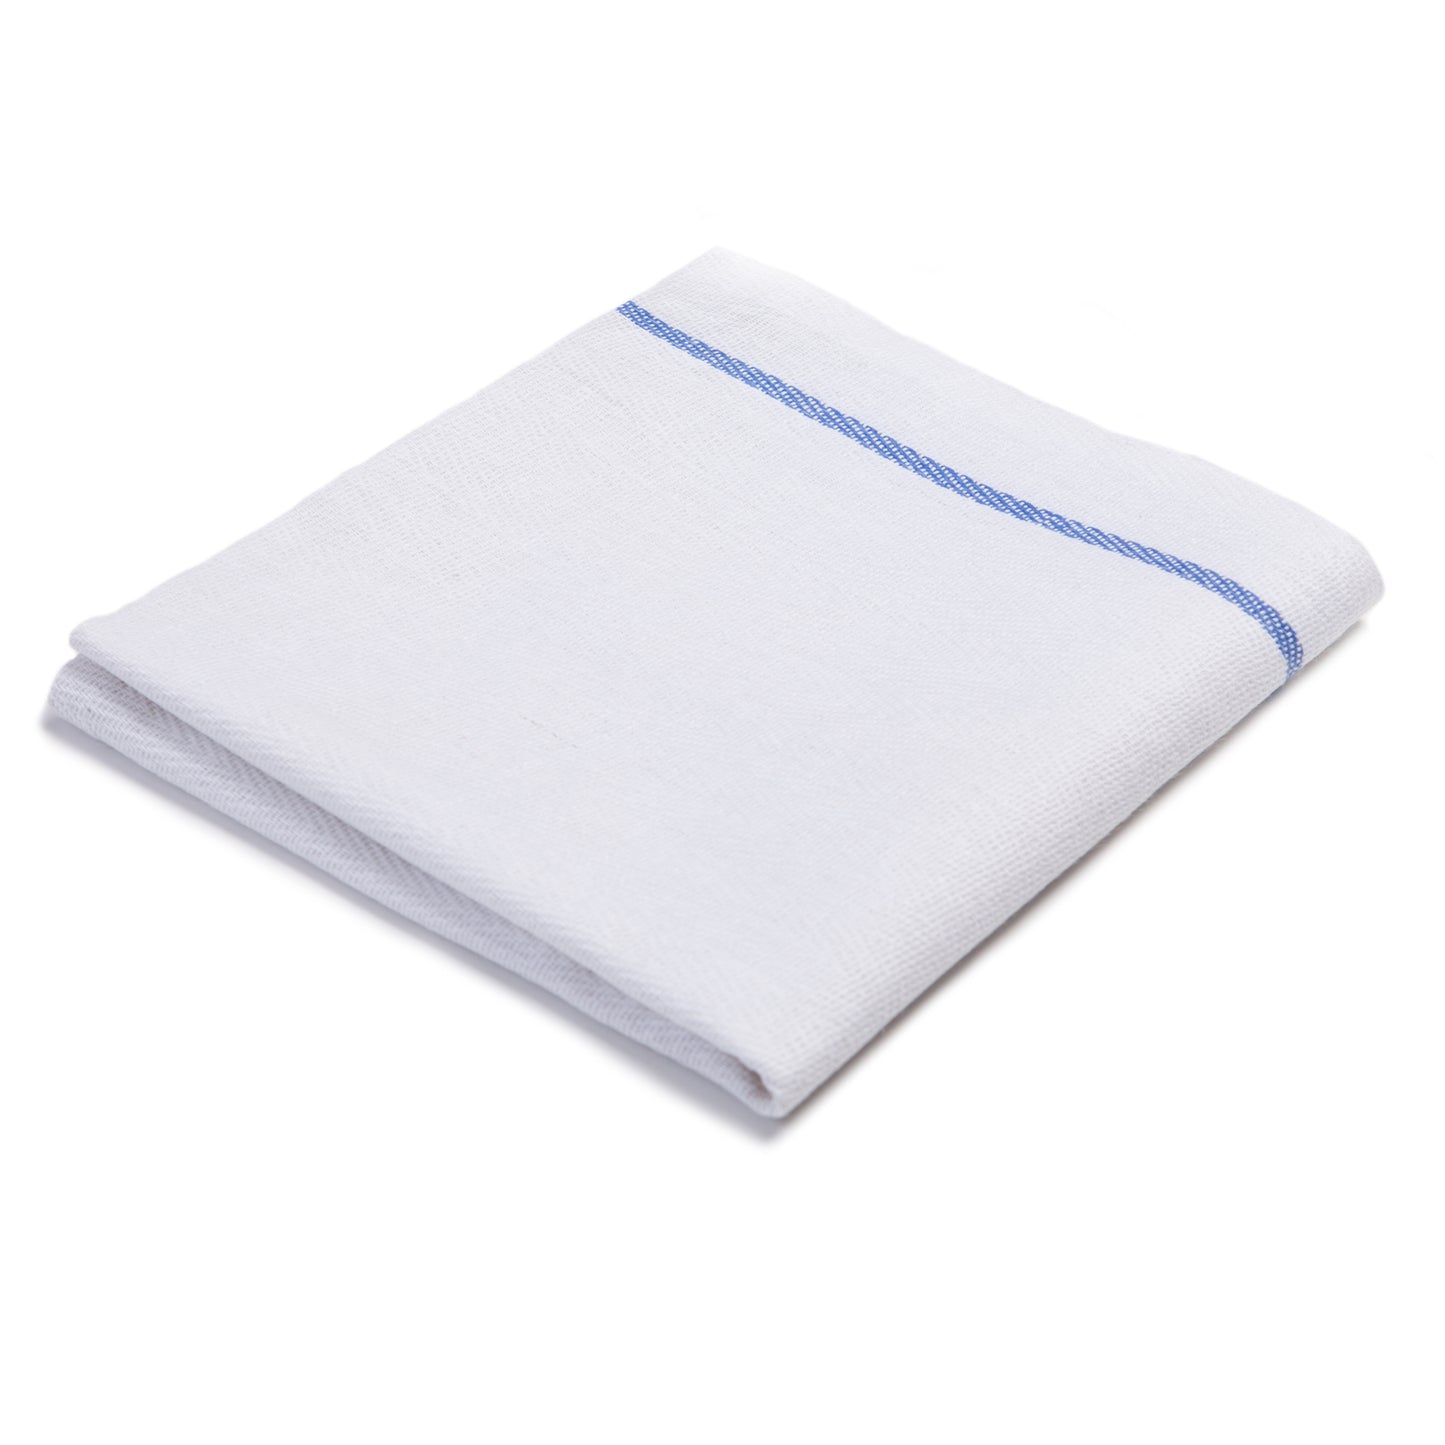 Herringbone Kitchen Towel, 15x26 inch, White with Blue Border